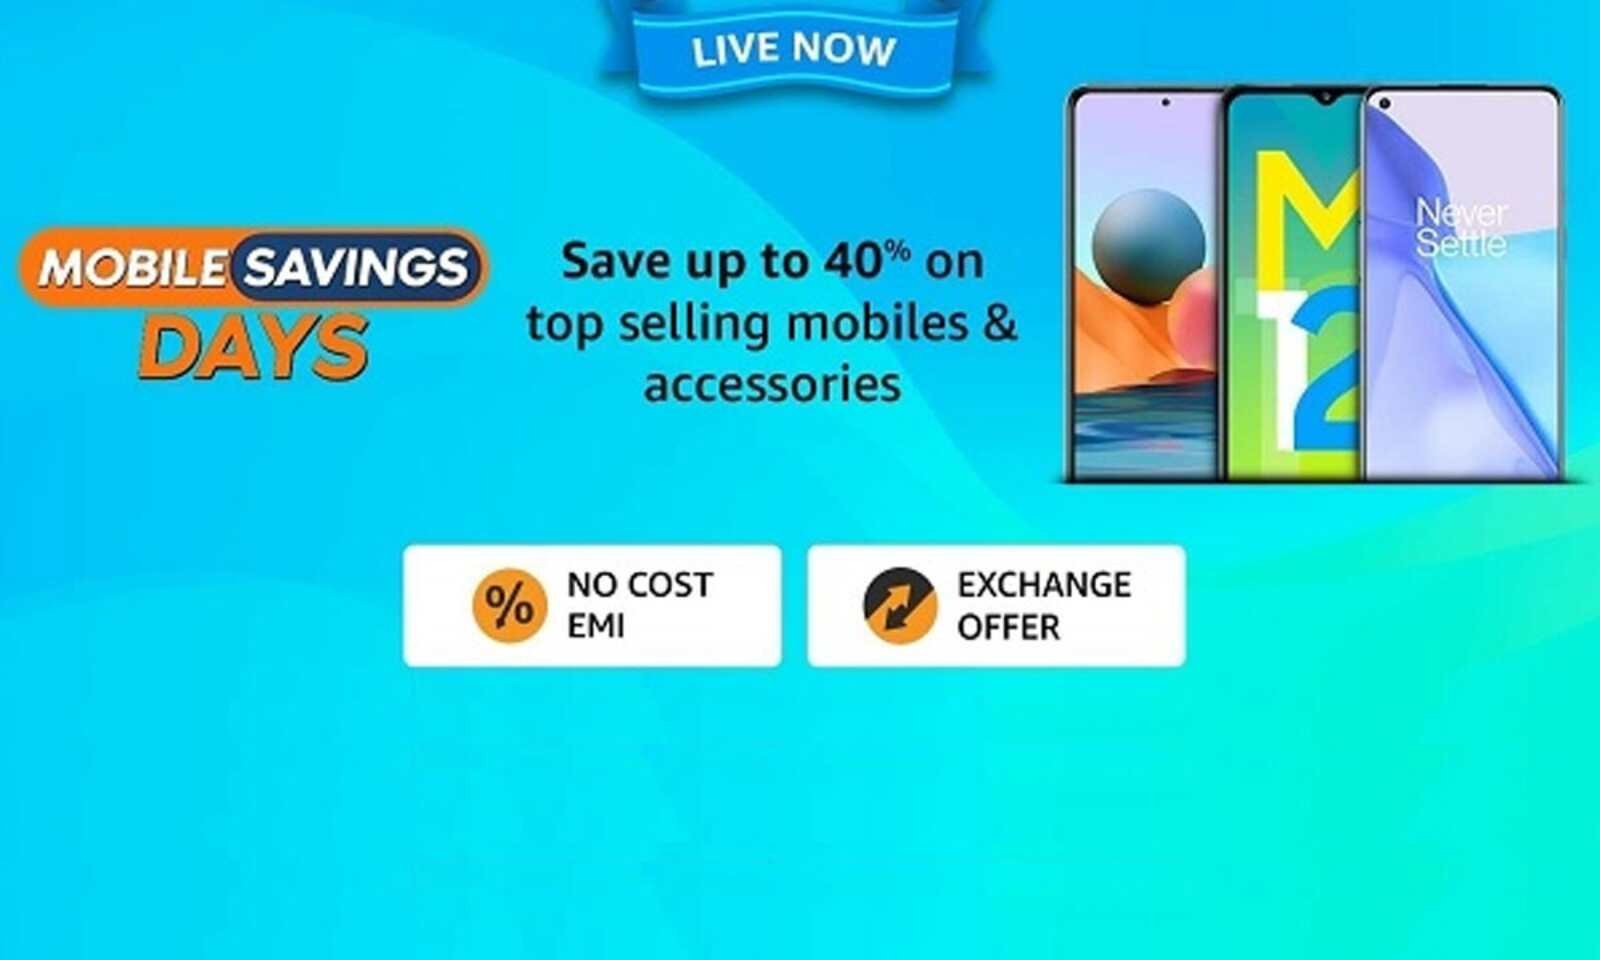 Amazon.in announces ‘Mobile Savings Days